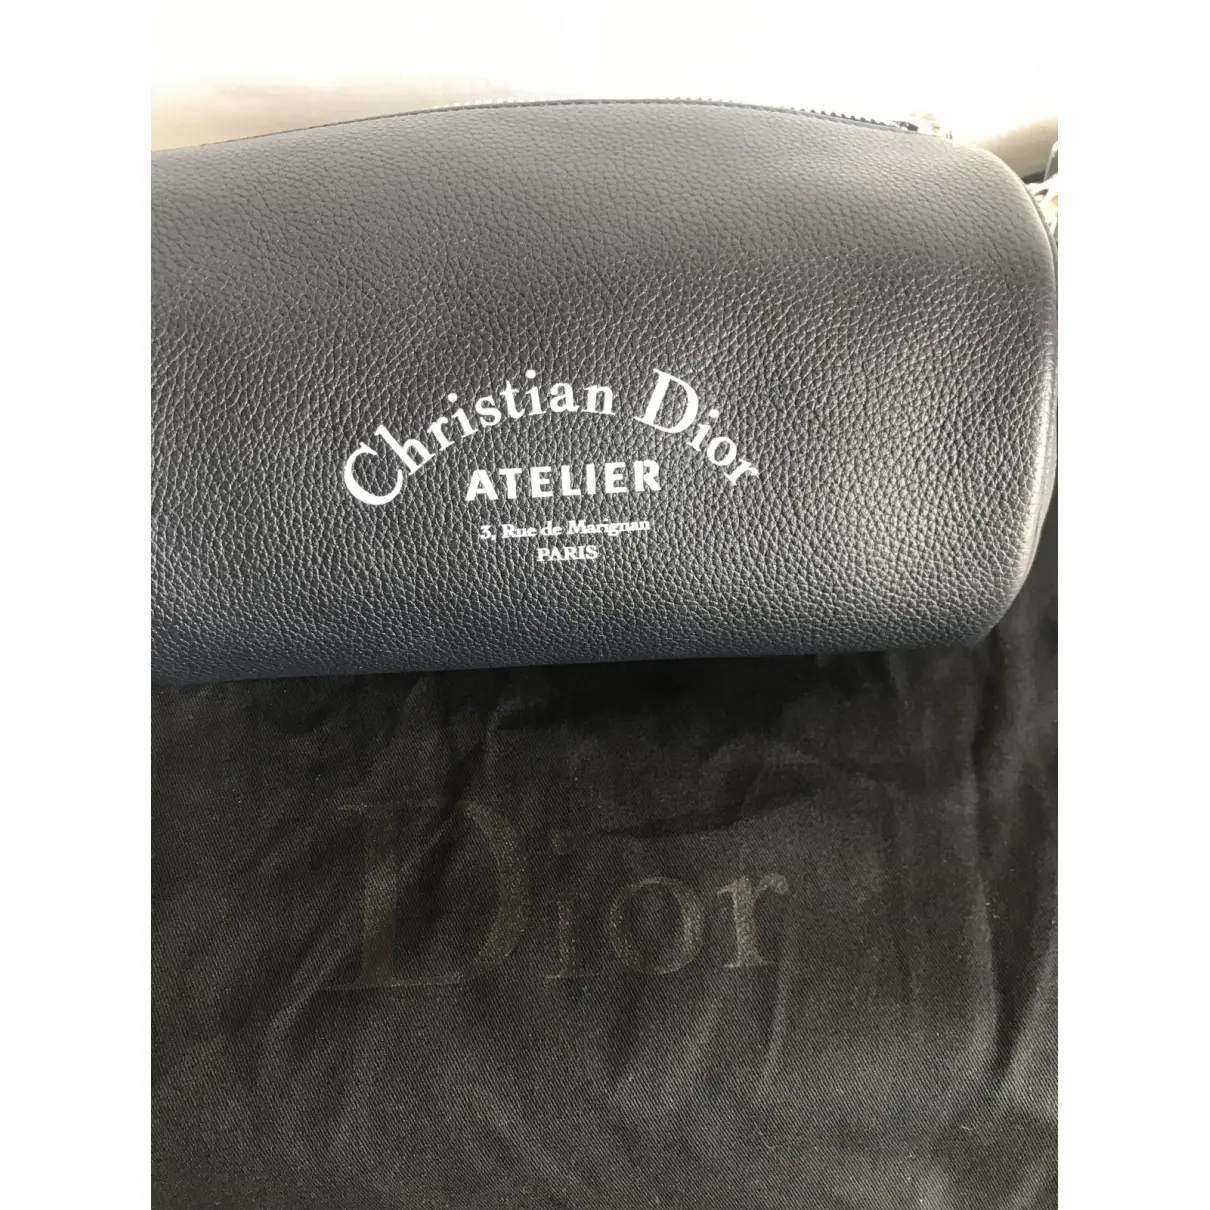 Leather bag Dior Homme